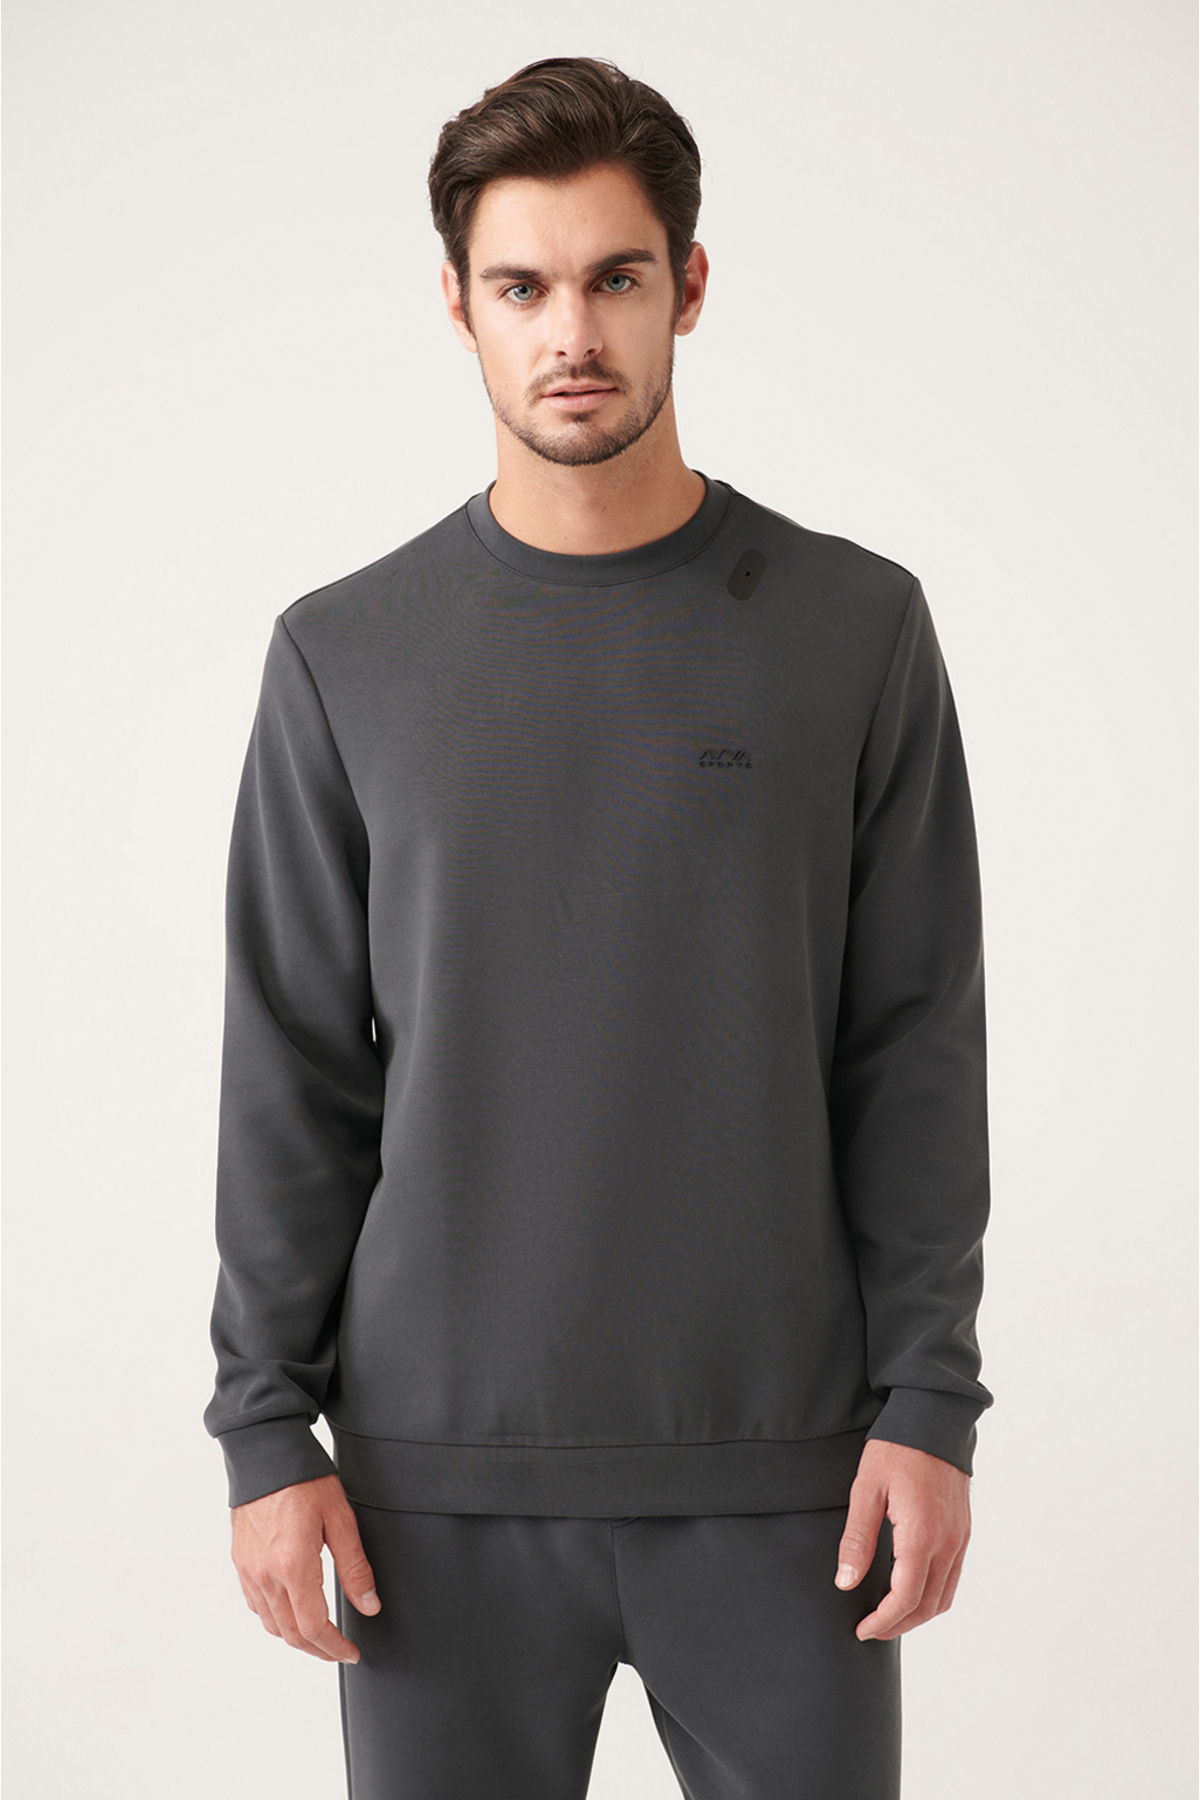 Avva Men's Anthracite Soft Touch Crew Neck Printed Comfort Fit Sweatshirt